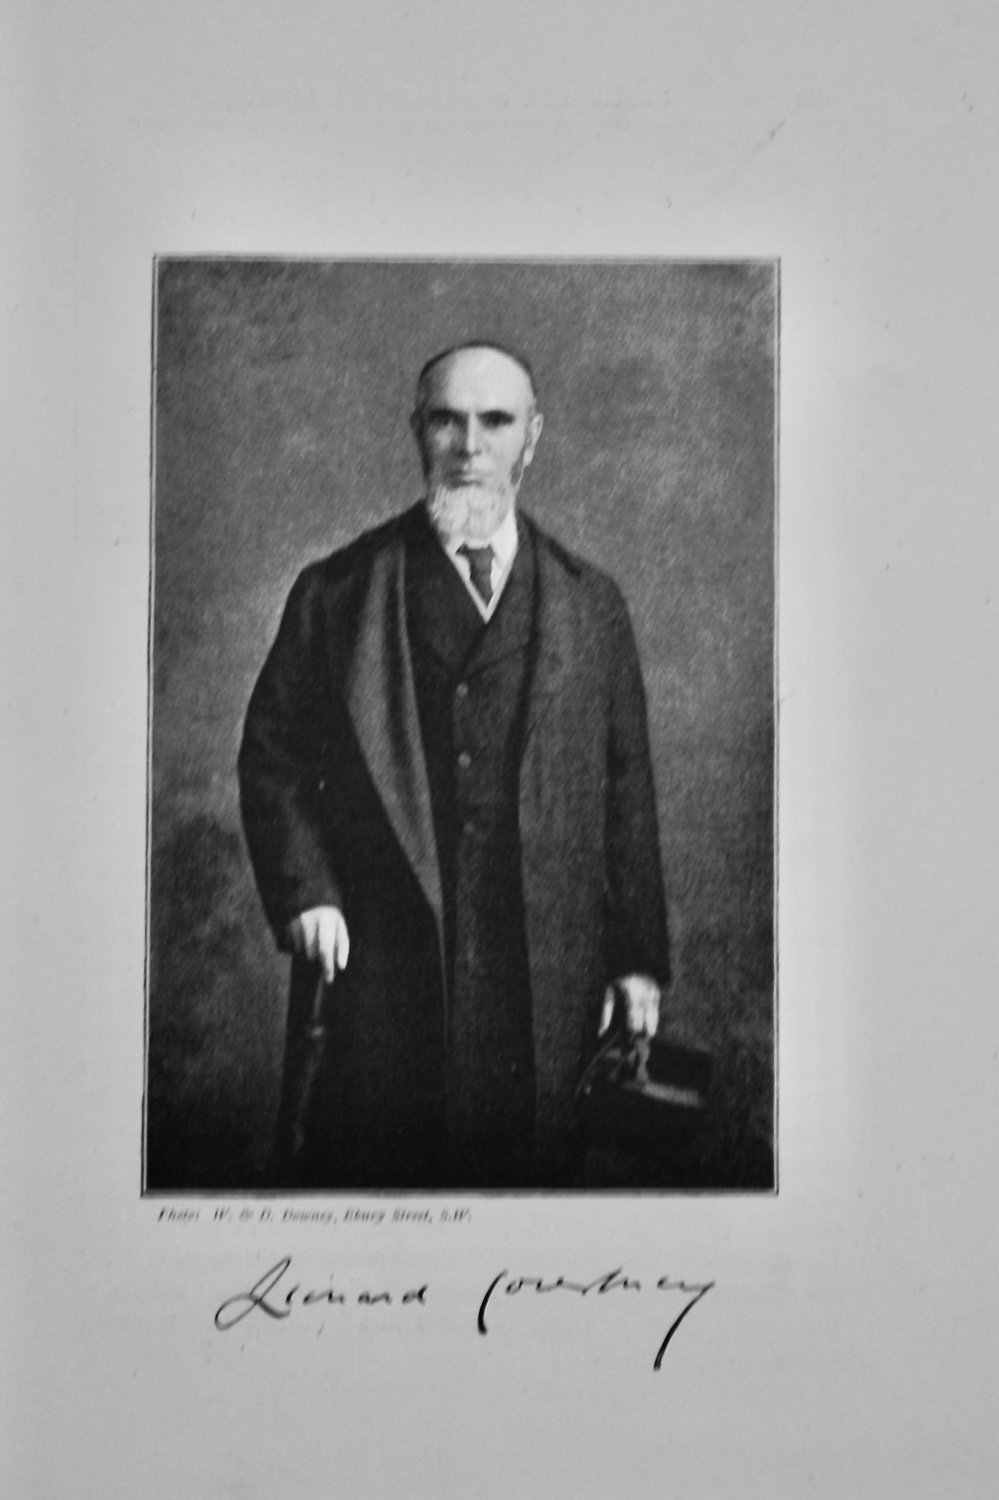 Mr. Leonard Courtney. M.P.  1895.